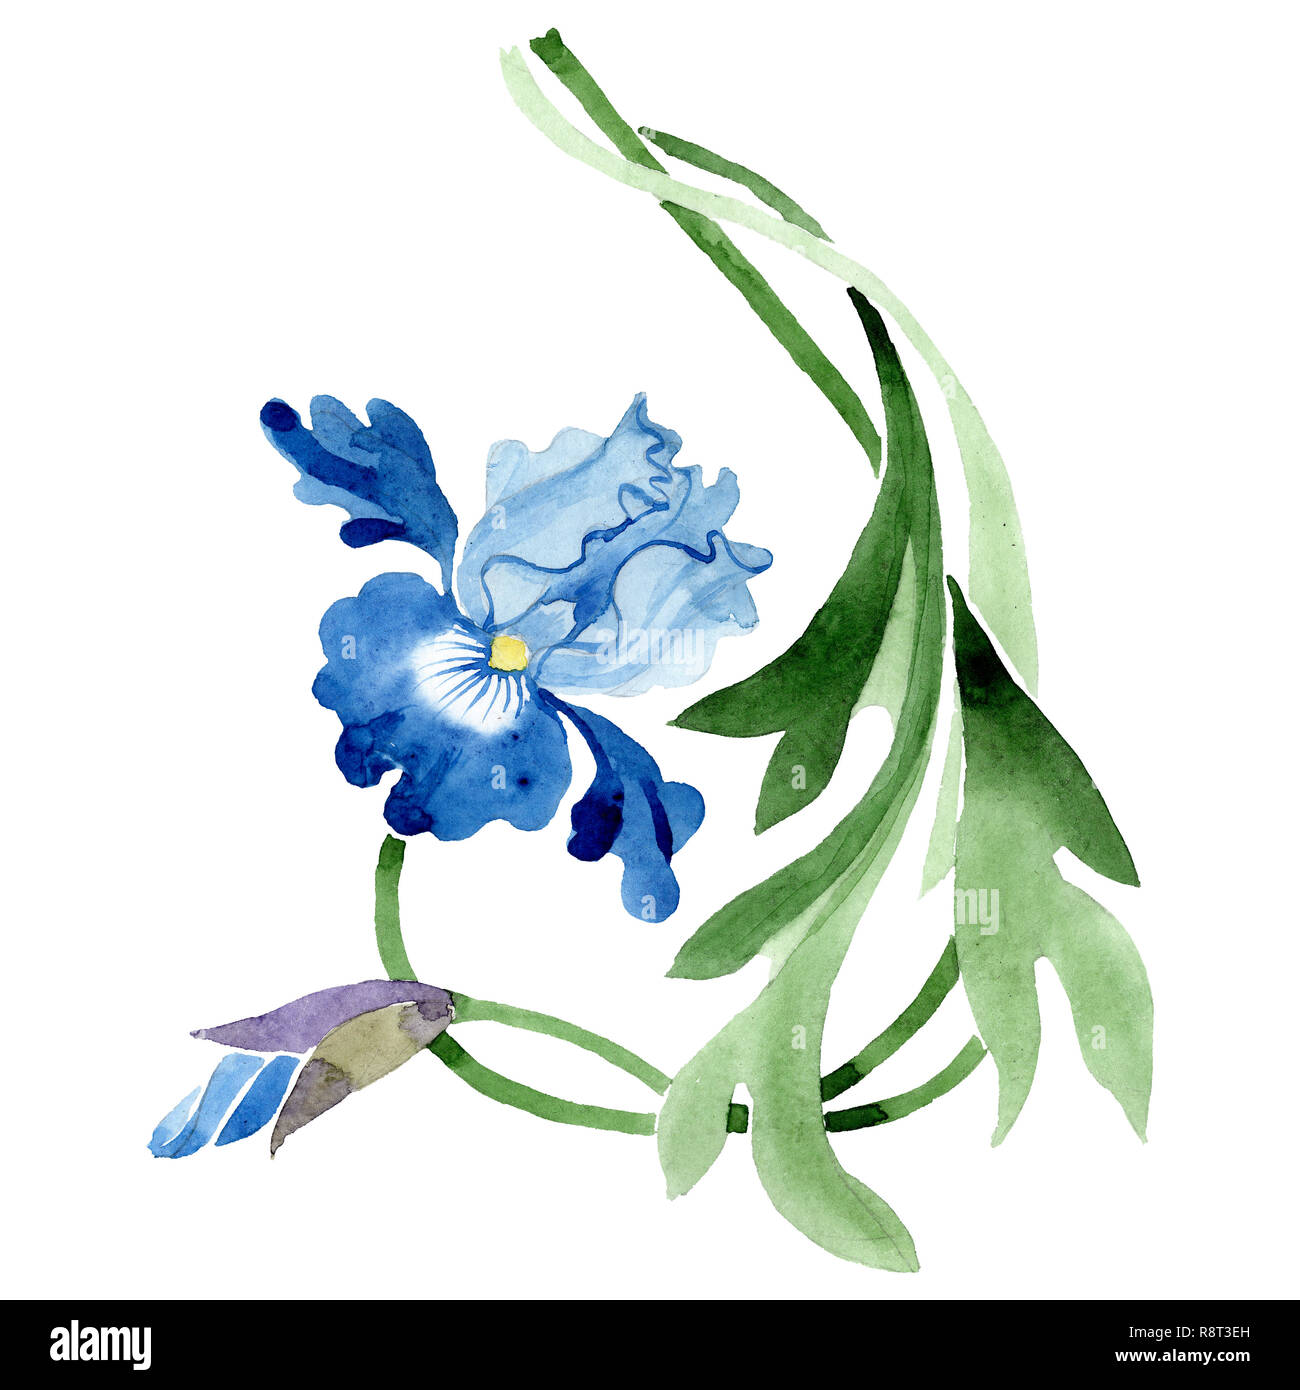 Blue iris plant Stock Vector Images - Alamy